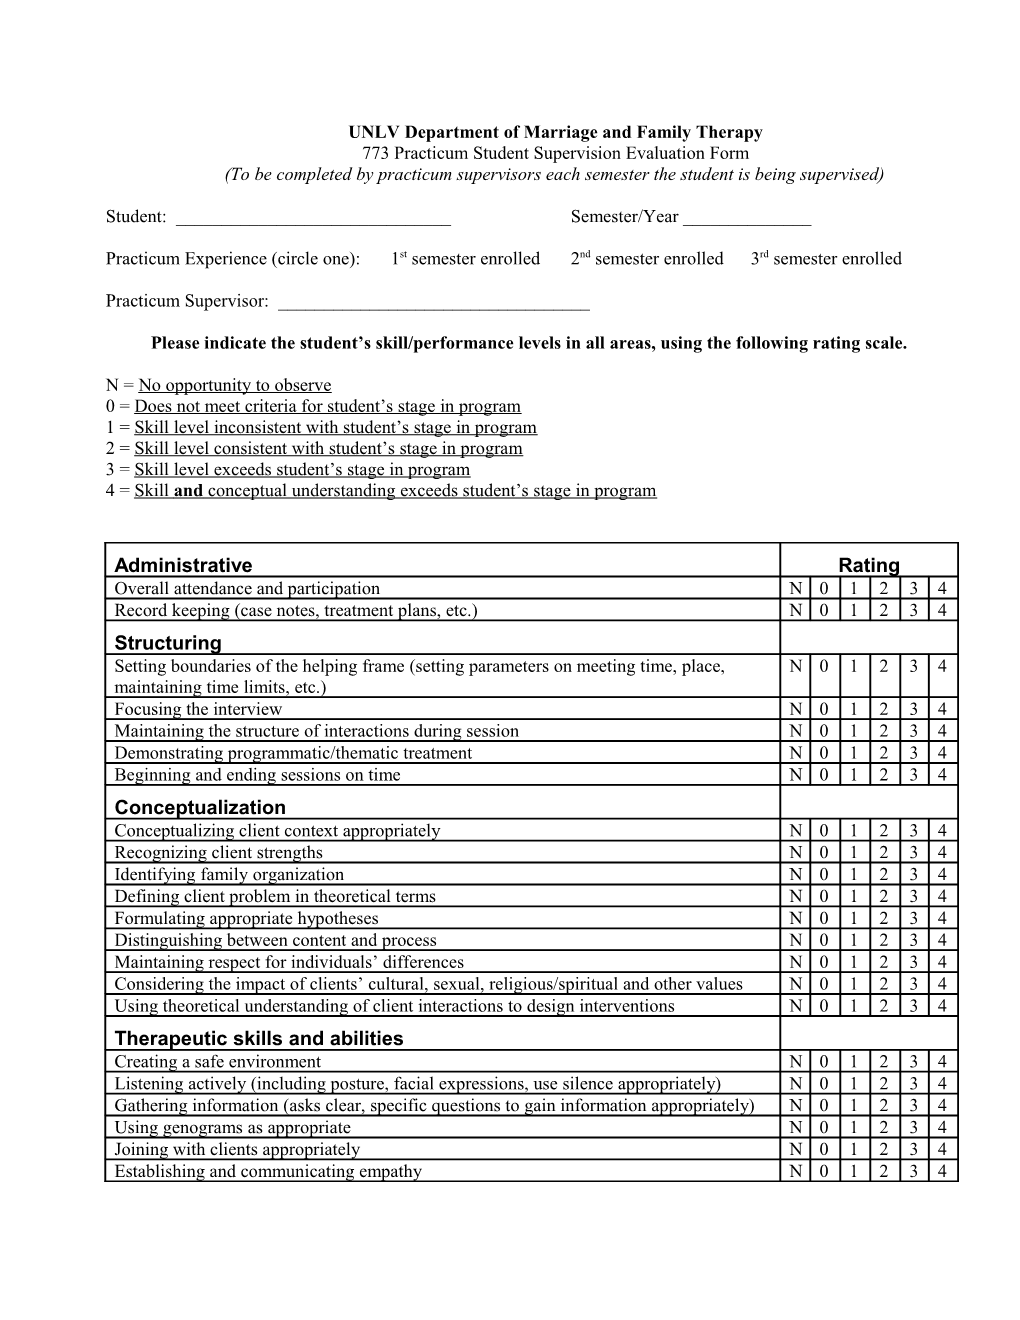 COU 773 Evaluation Form